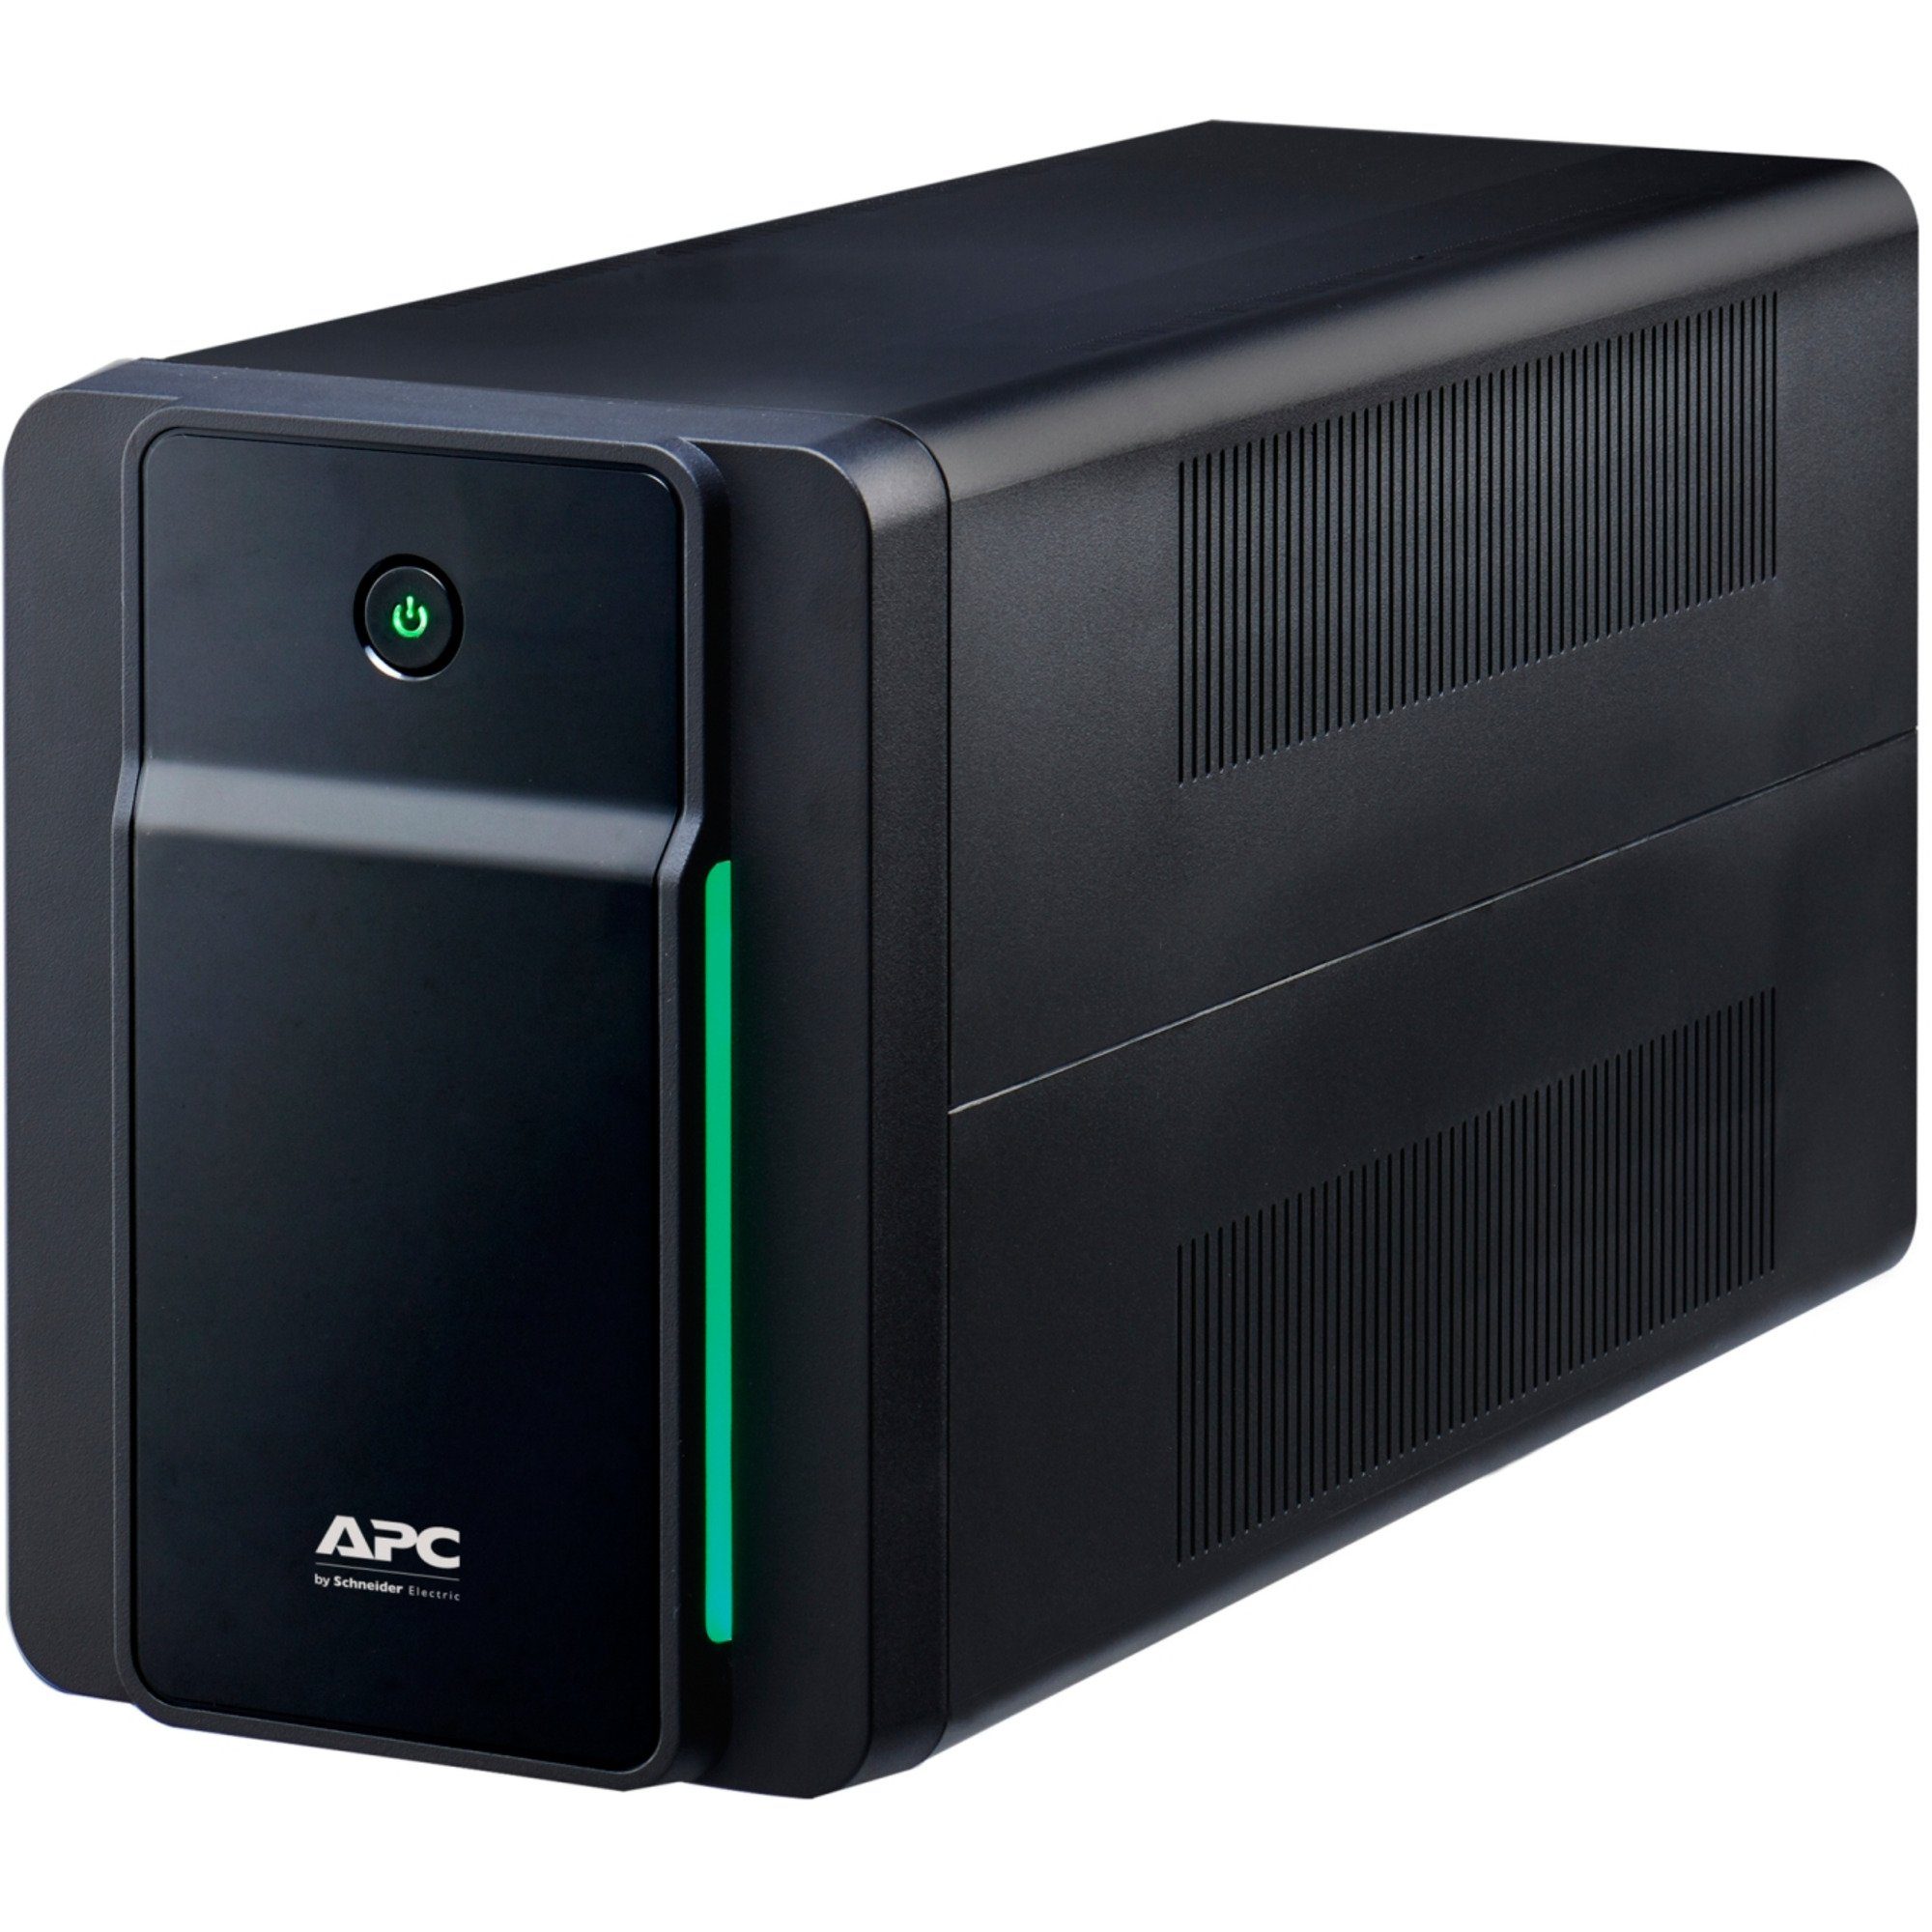 APC APC Back-UPS 1600VA, 230V, AVR, IEC Sockets, USV Stromspeicher